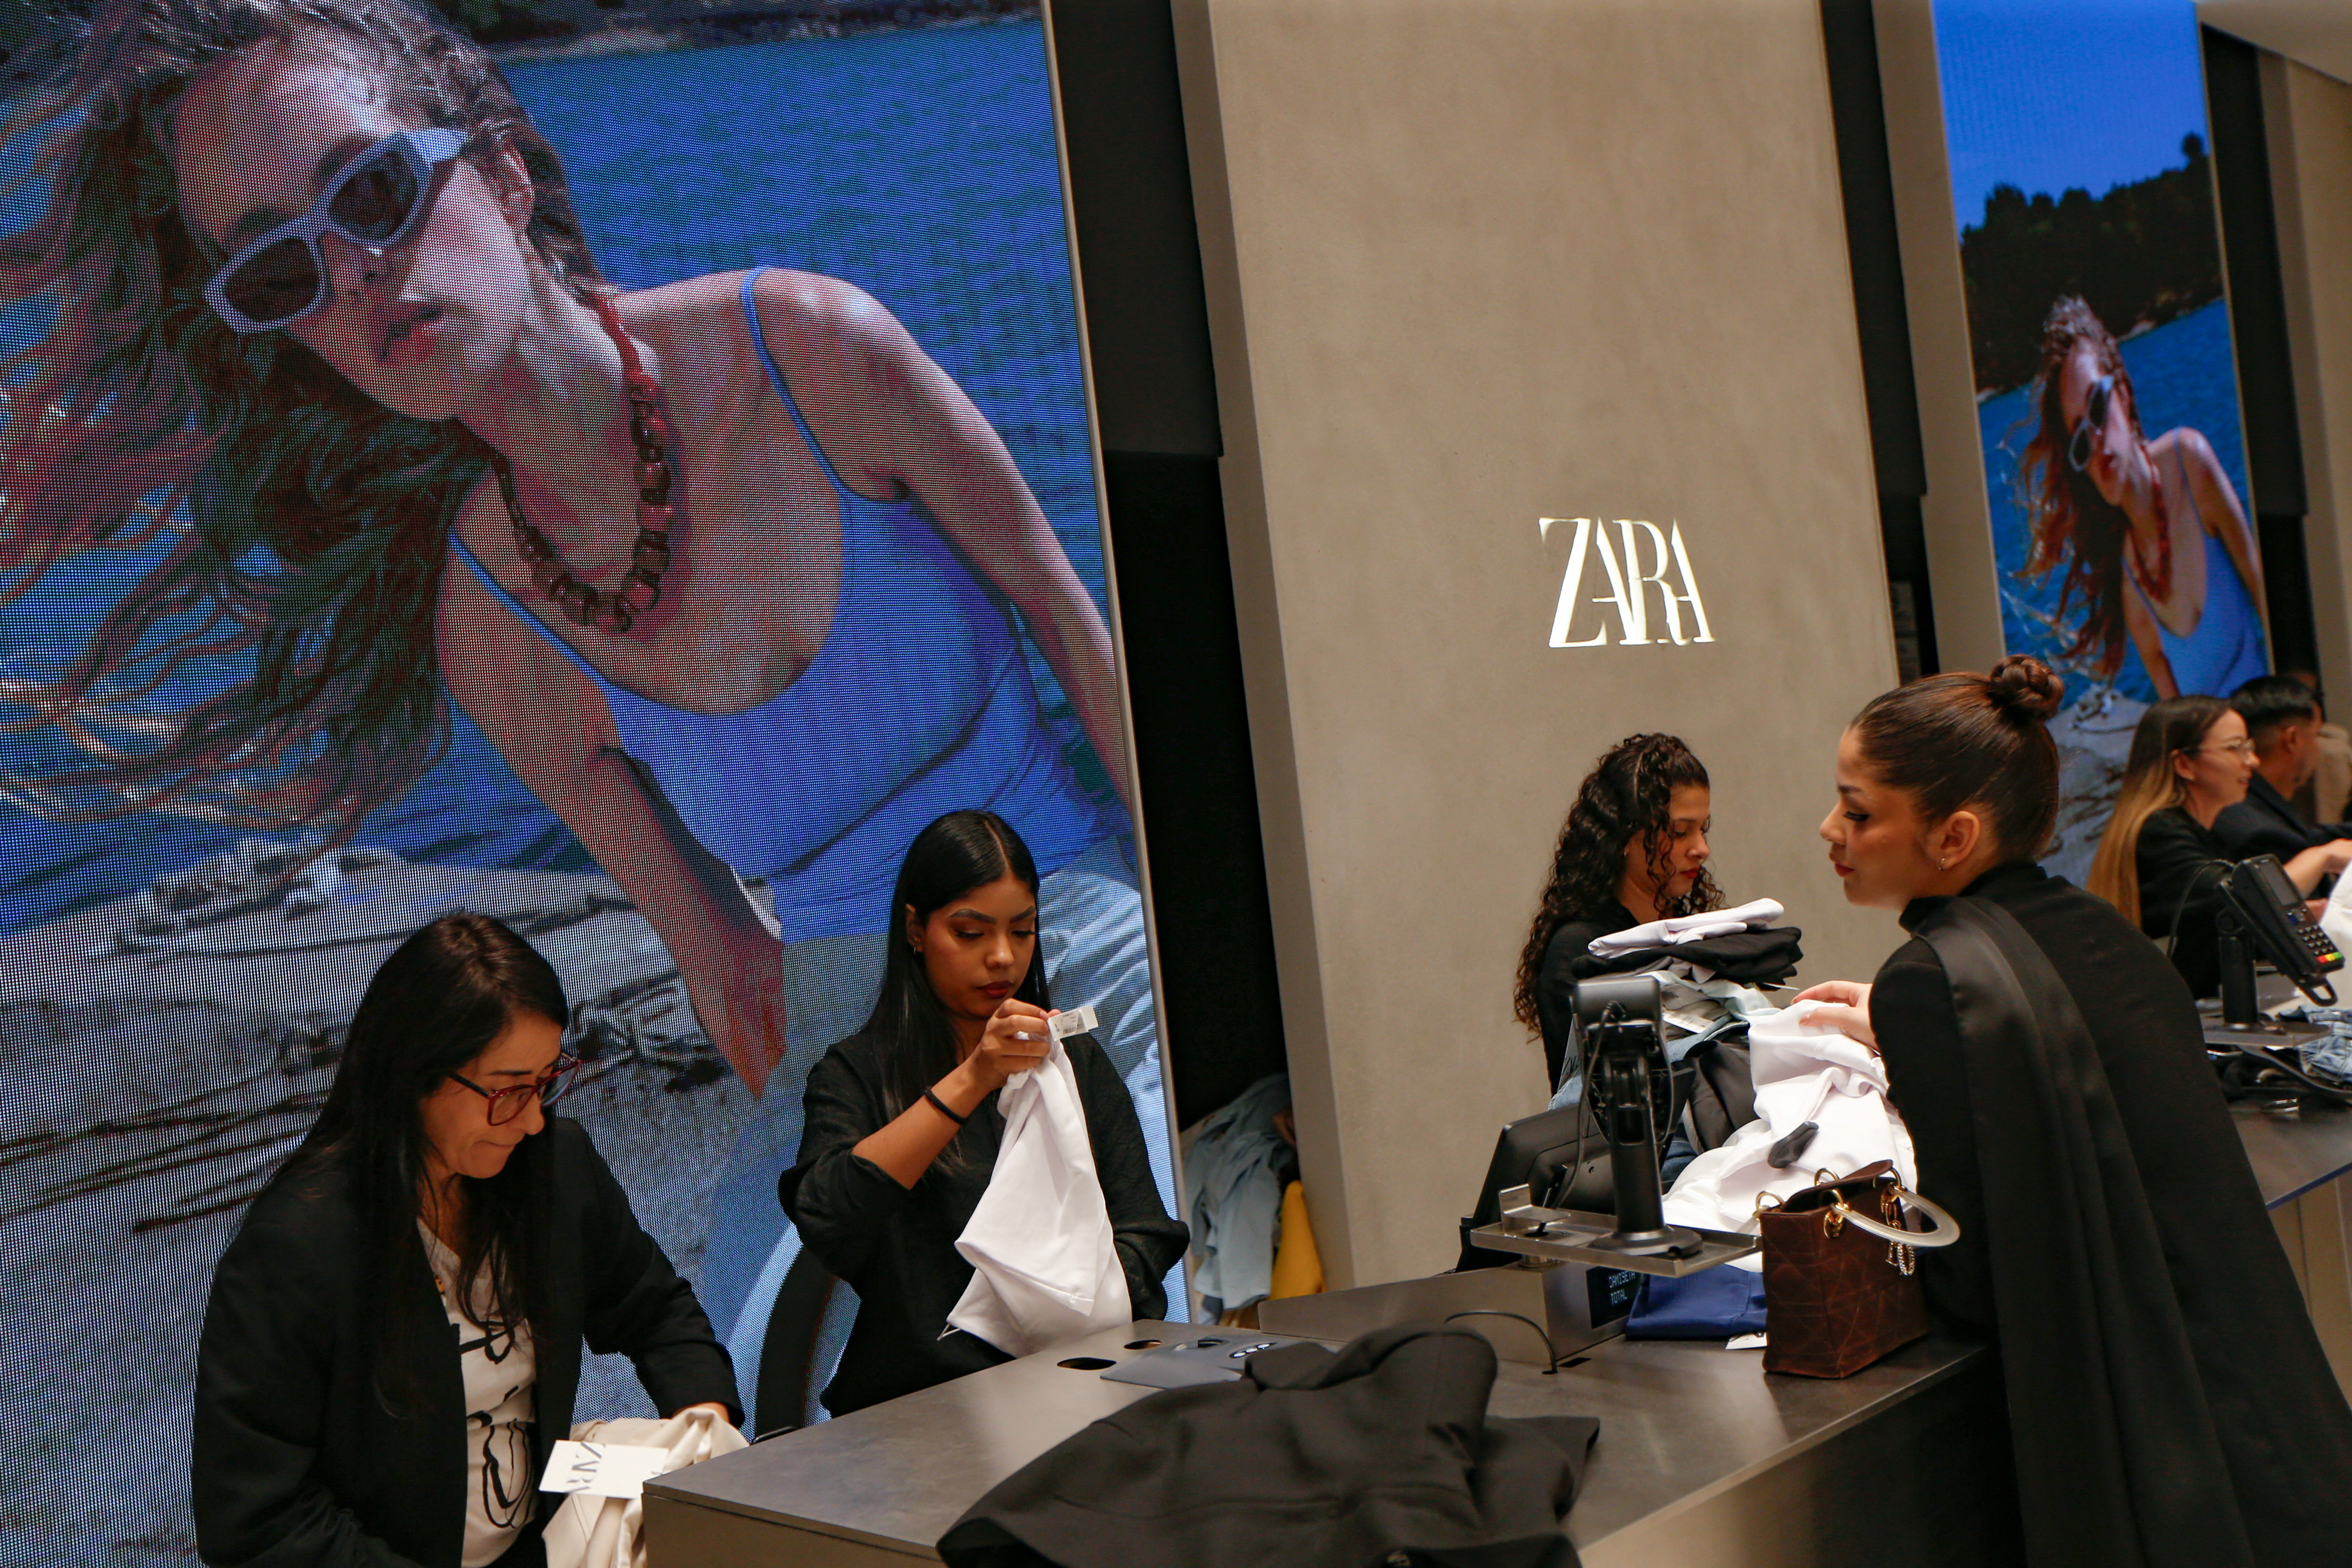 Spanish retail giant Inditex opens Zara franchise in Caracas